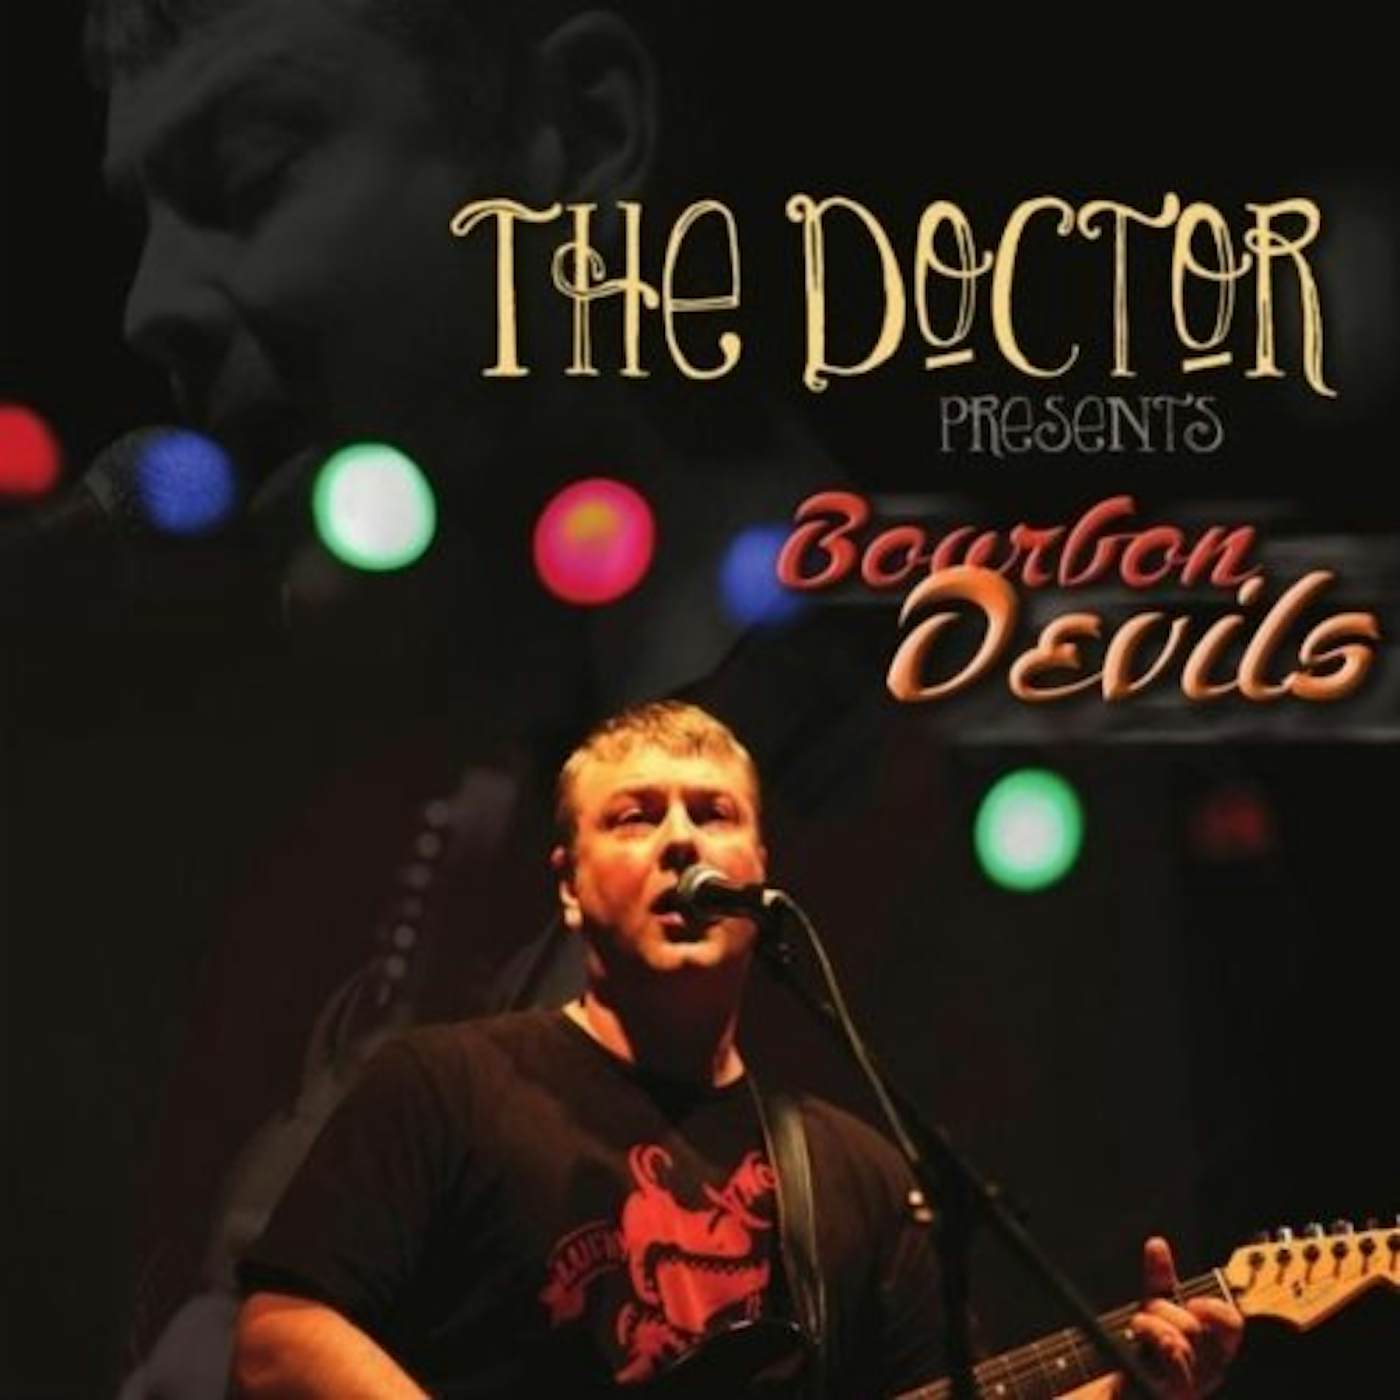 Doctor BOURBON DEVILS CD